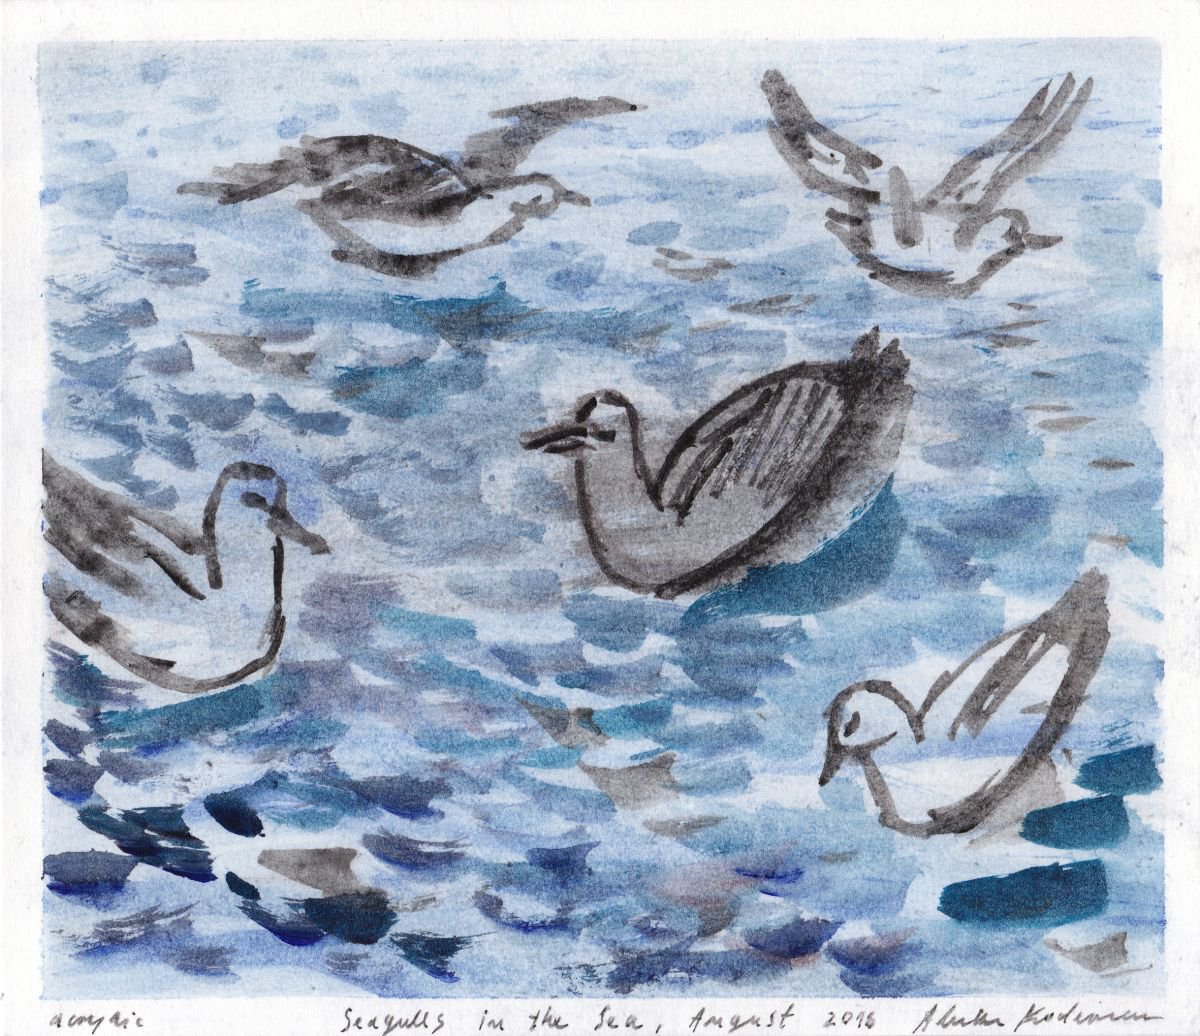 Seagulls in the Sea, August 2016, acrylic on paper, 21 x 24,2 cm by Alenka Koderman